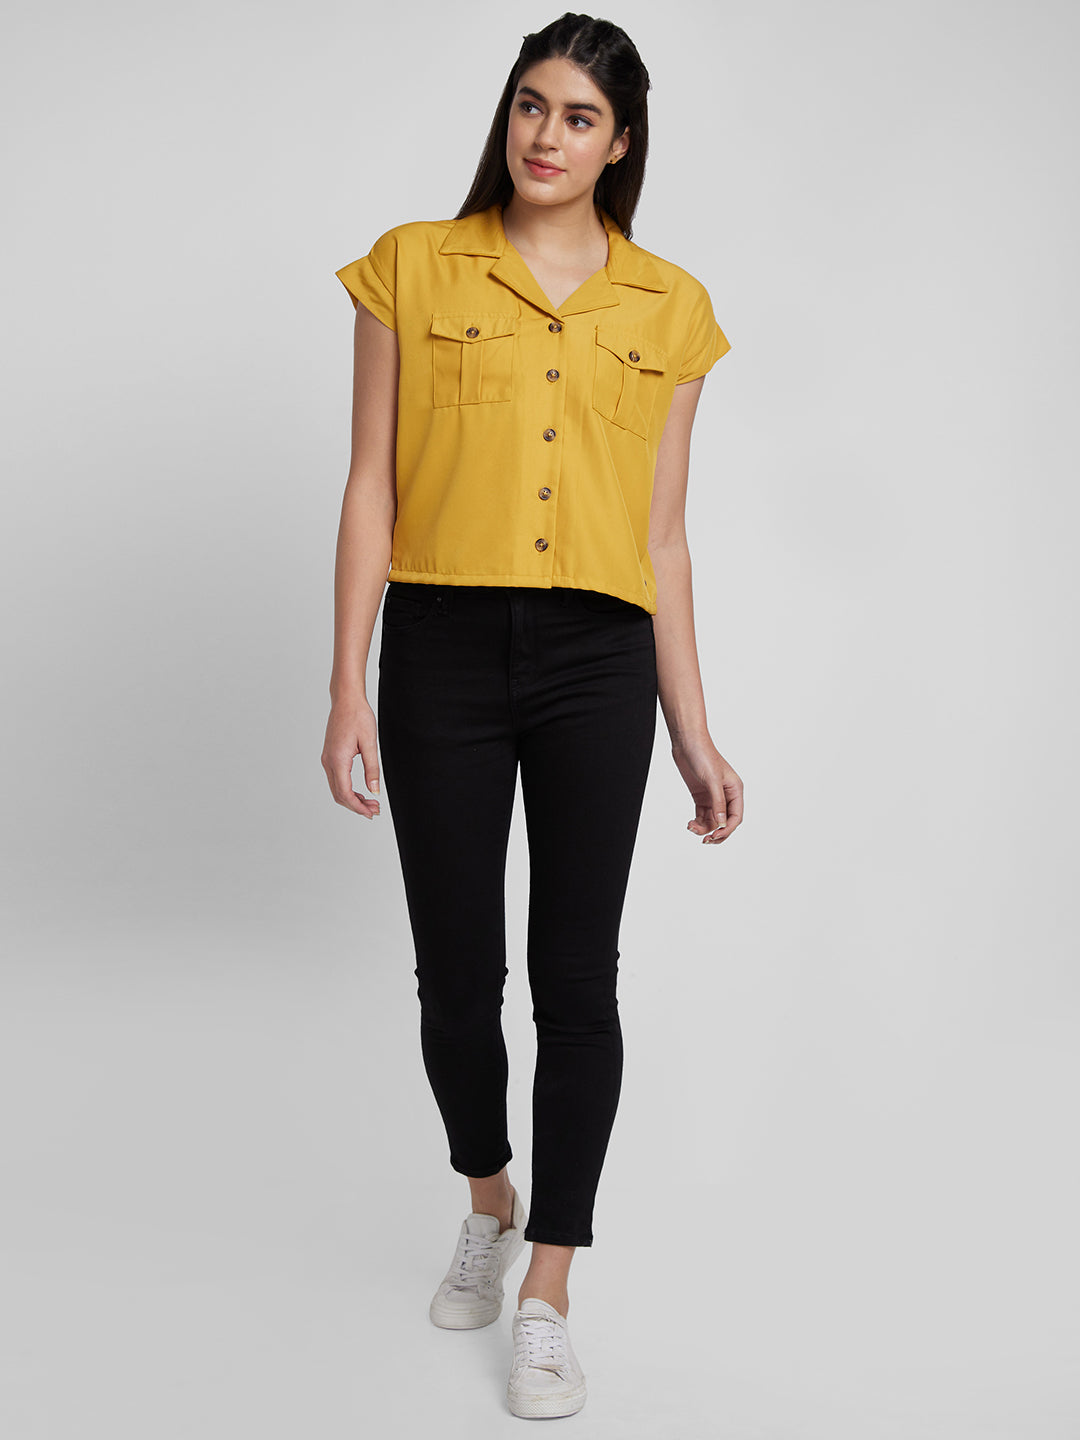 Mustard Yellow Denim Shirts  Buy Mustard Yellow Denim Shirts online in  India